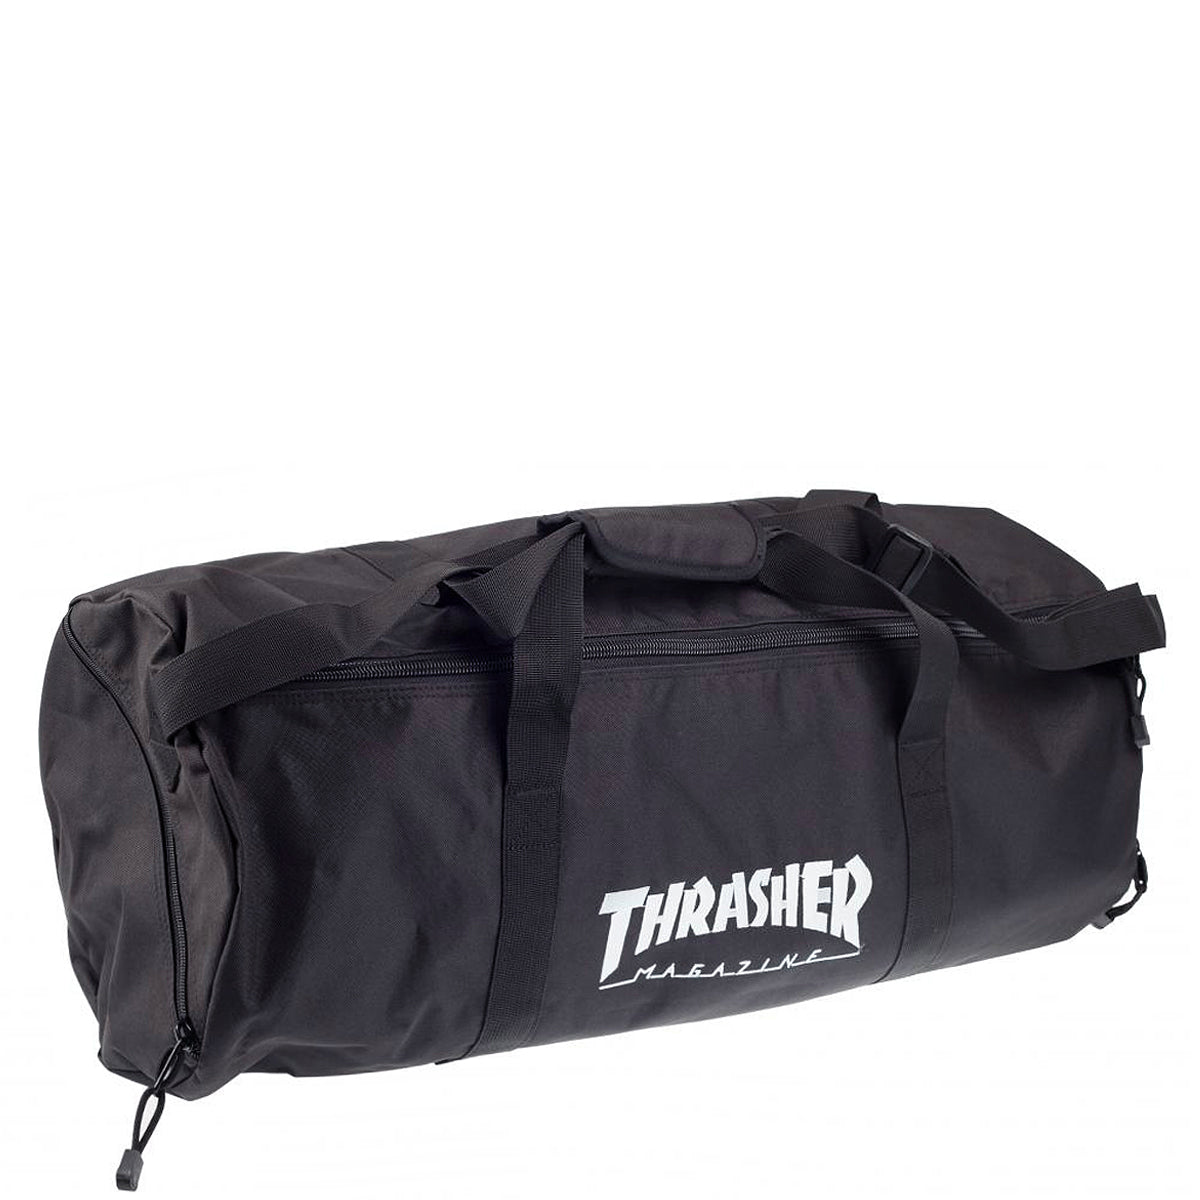 Thrasher Bag Logo Duffel Bag - Black - Prime Delux Store